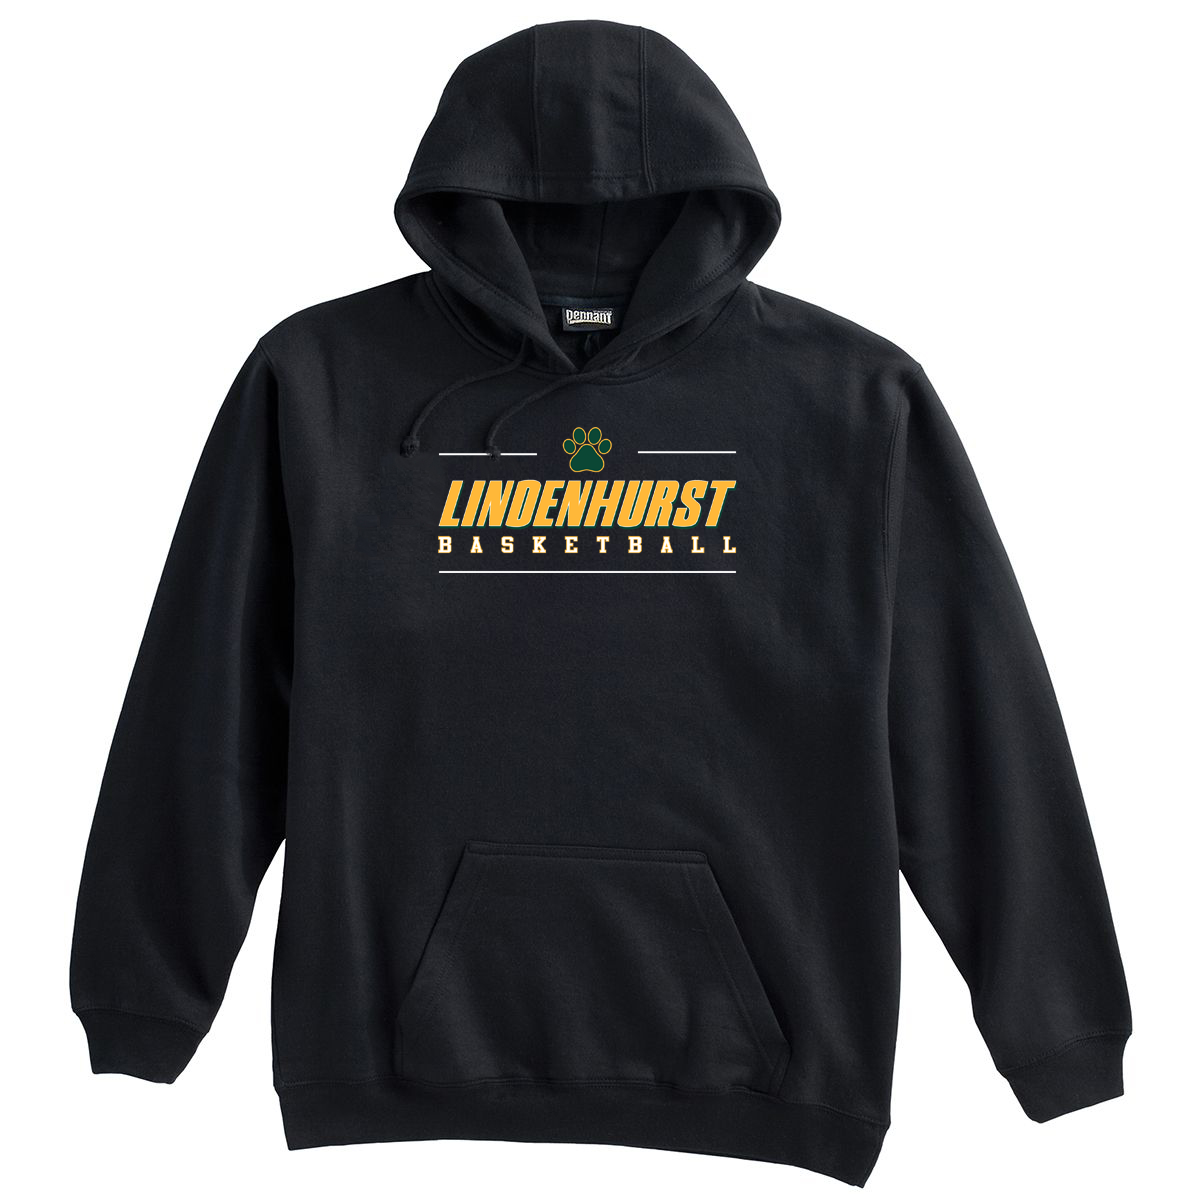 Lindenhurst Basketball Sweatshirt